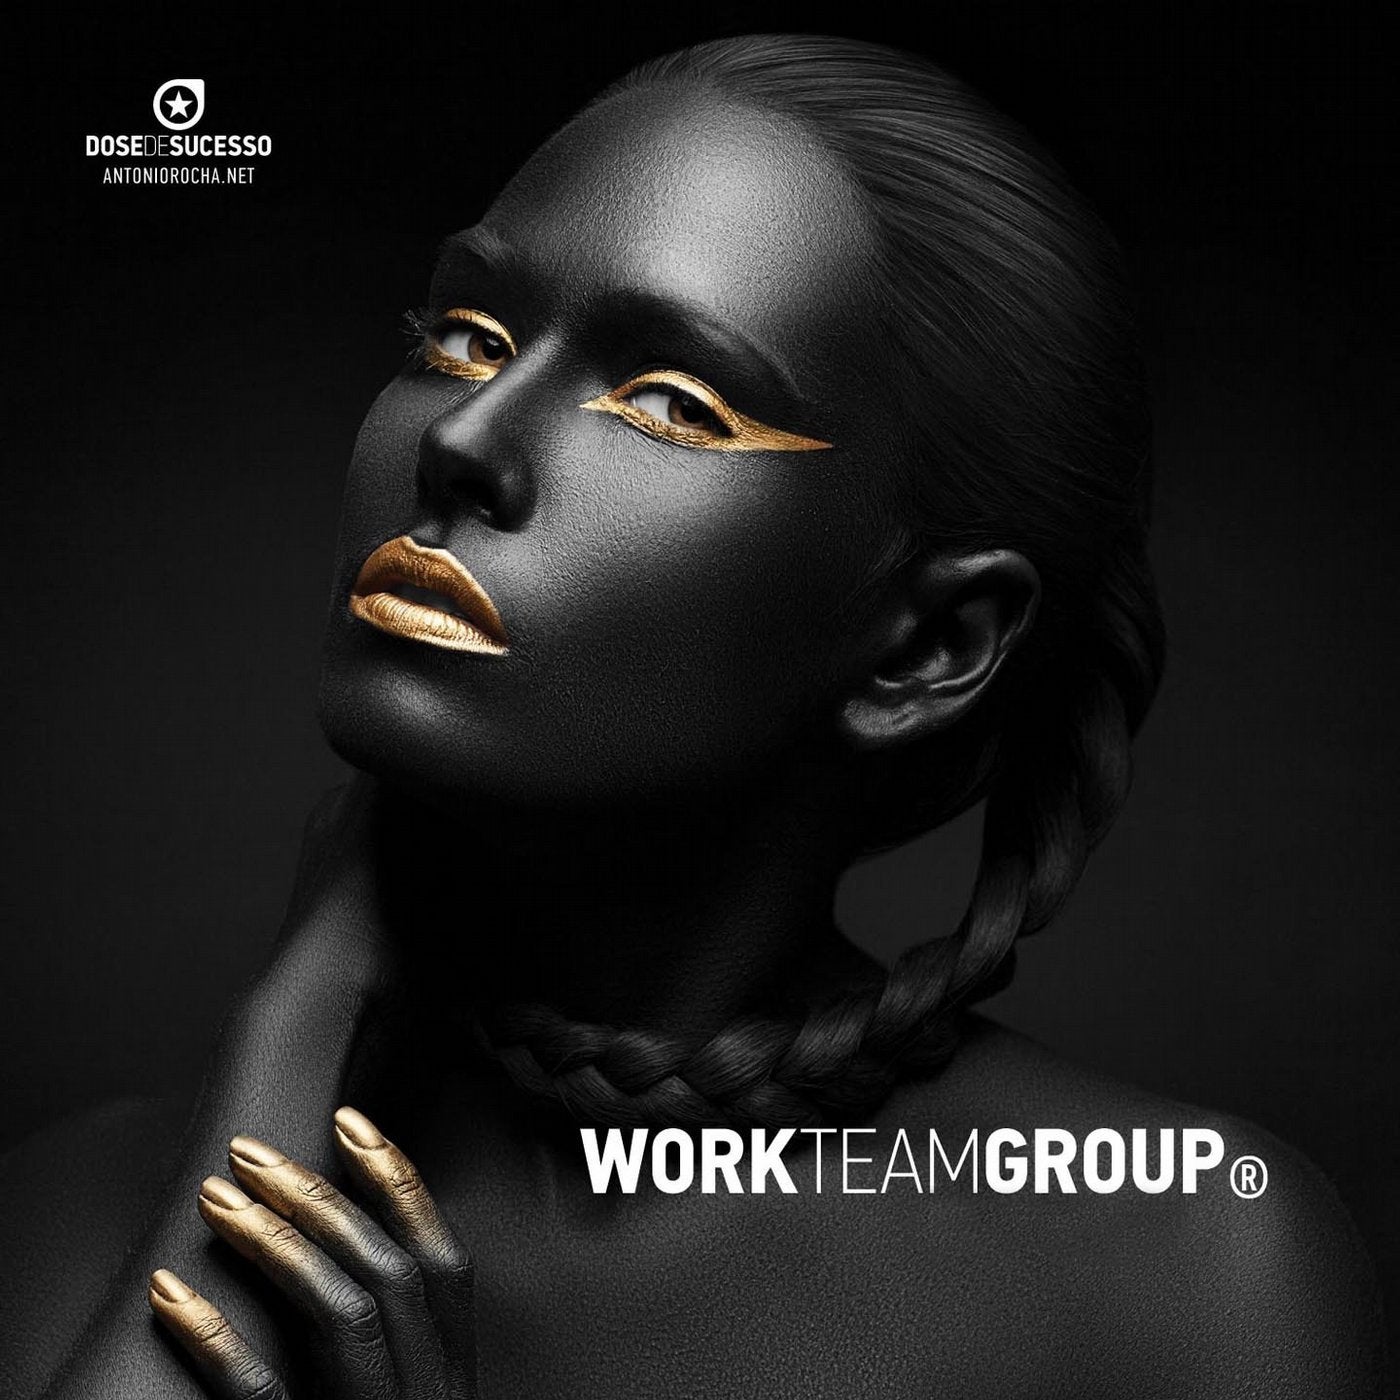 Work Team Group